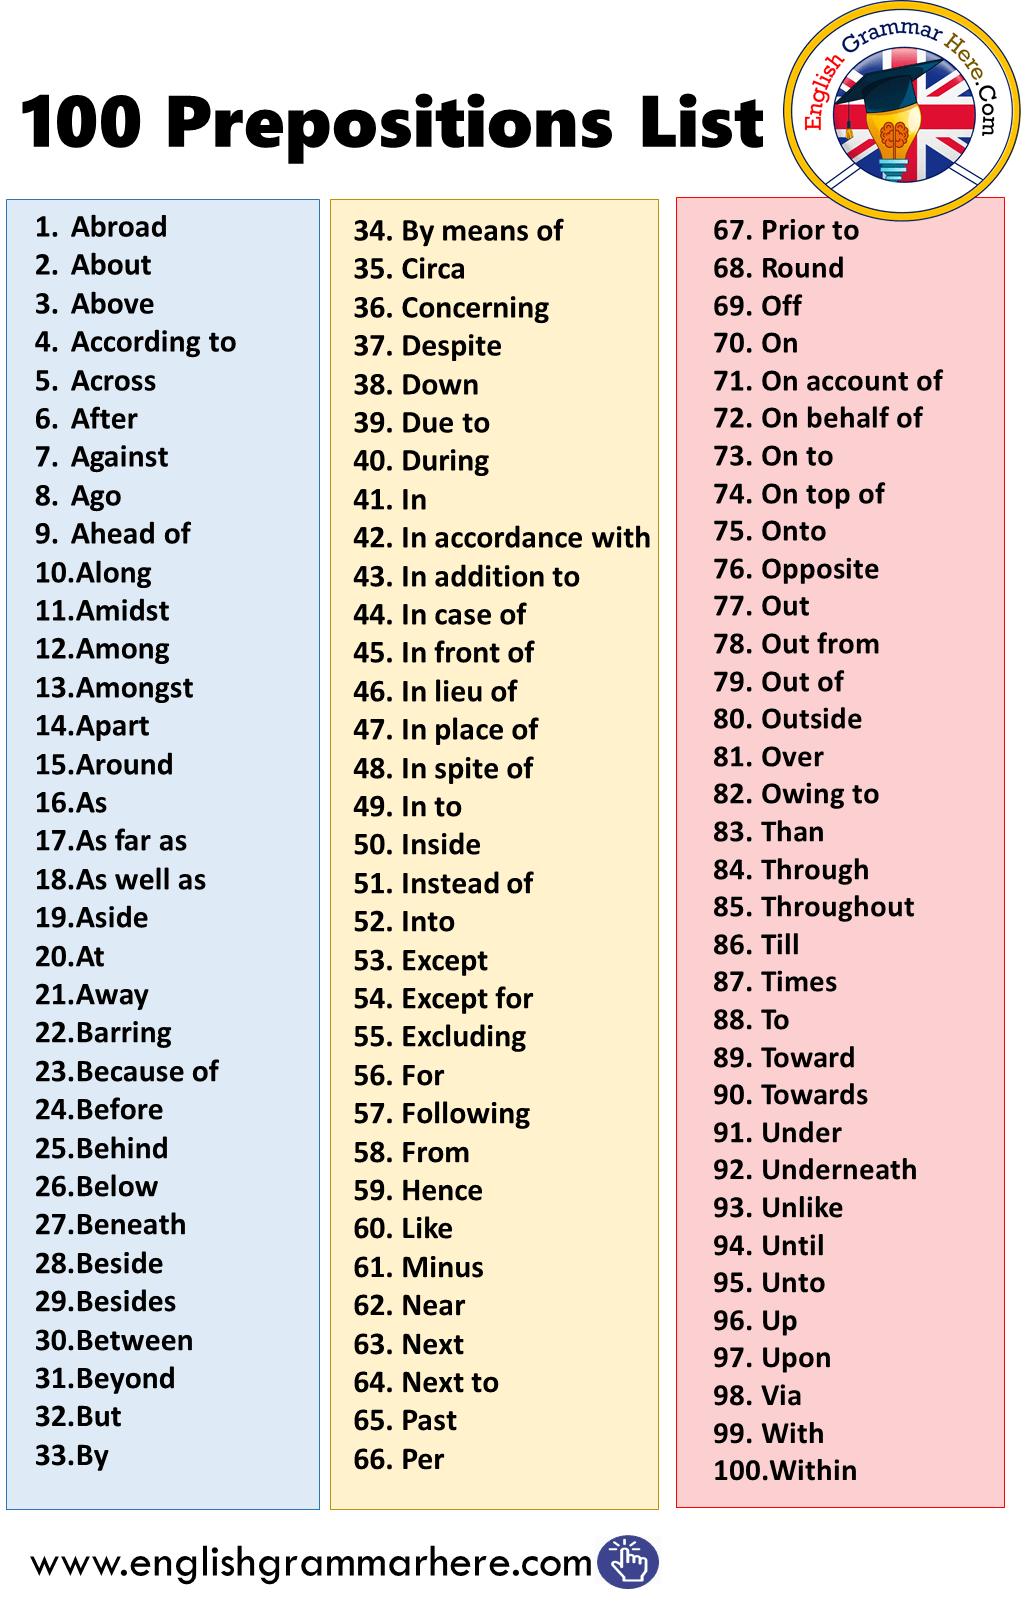 100 Prepositions List in English